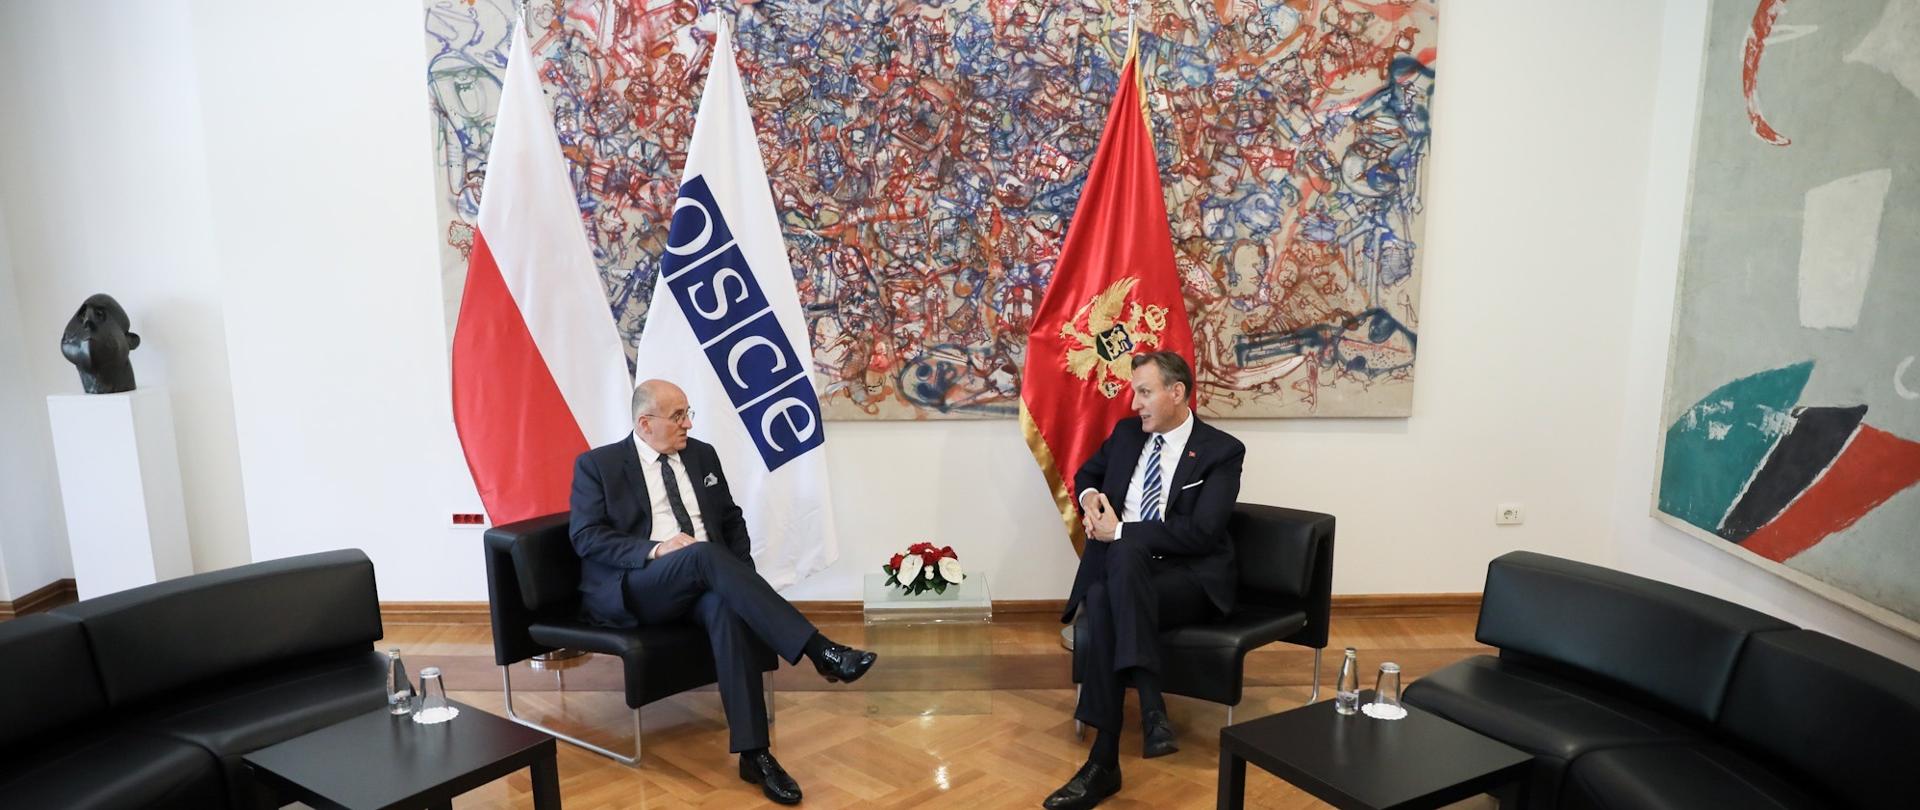 OSCE Chairman Zbigniew Rau's visit to Montenegro